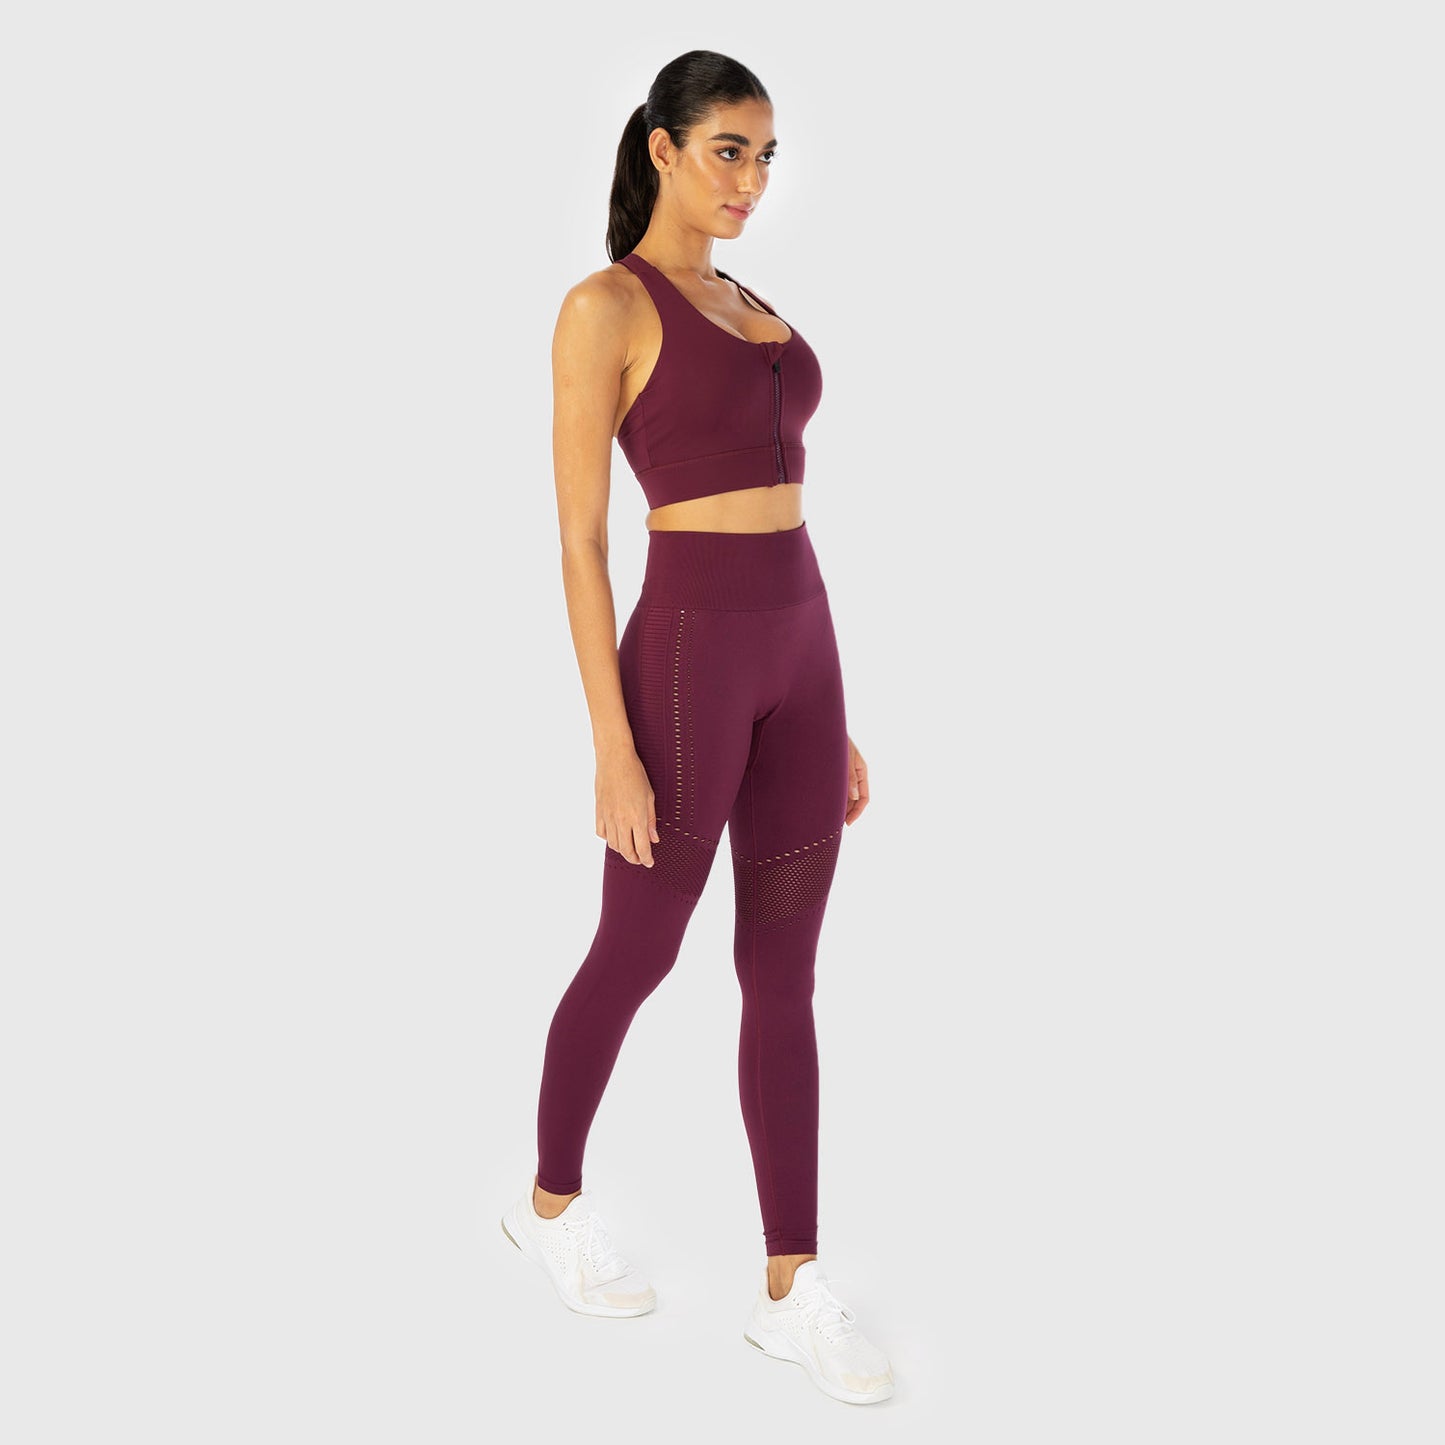 squatwolf-workout-clothes-infinity-zip-up-workout-bra-purple-medium-impact-bra-sports-bra-for-gym